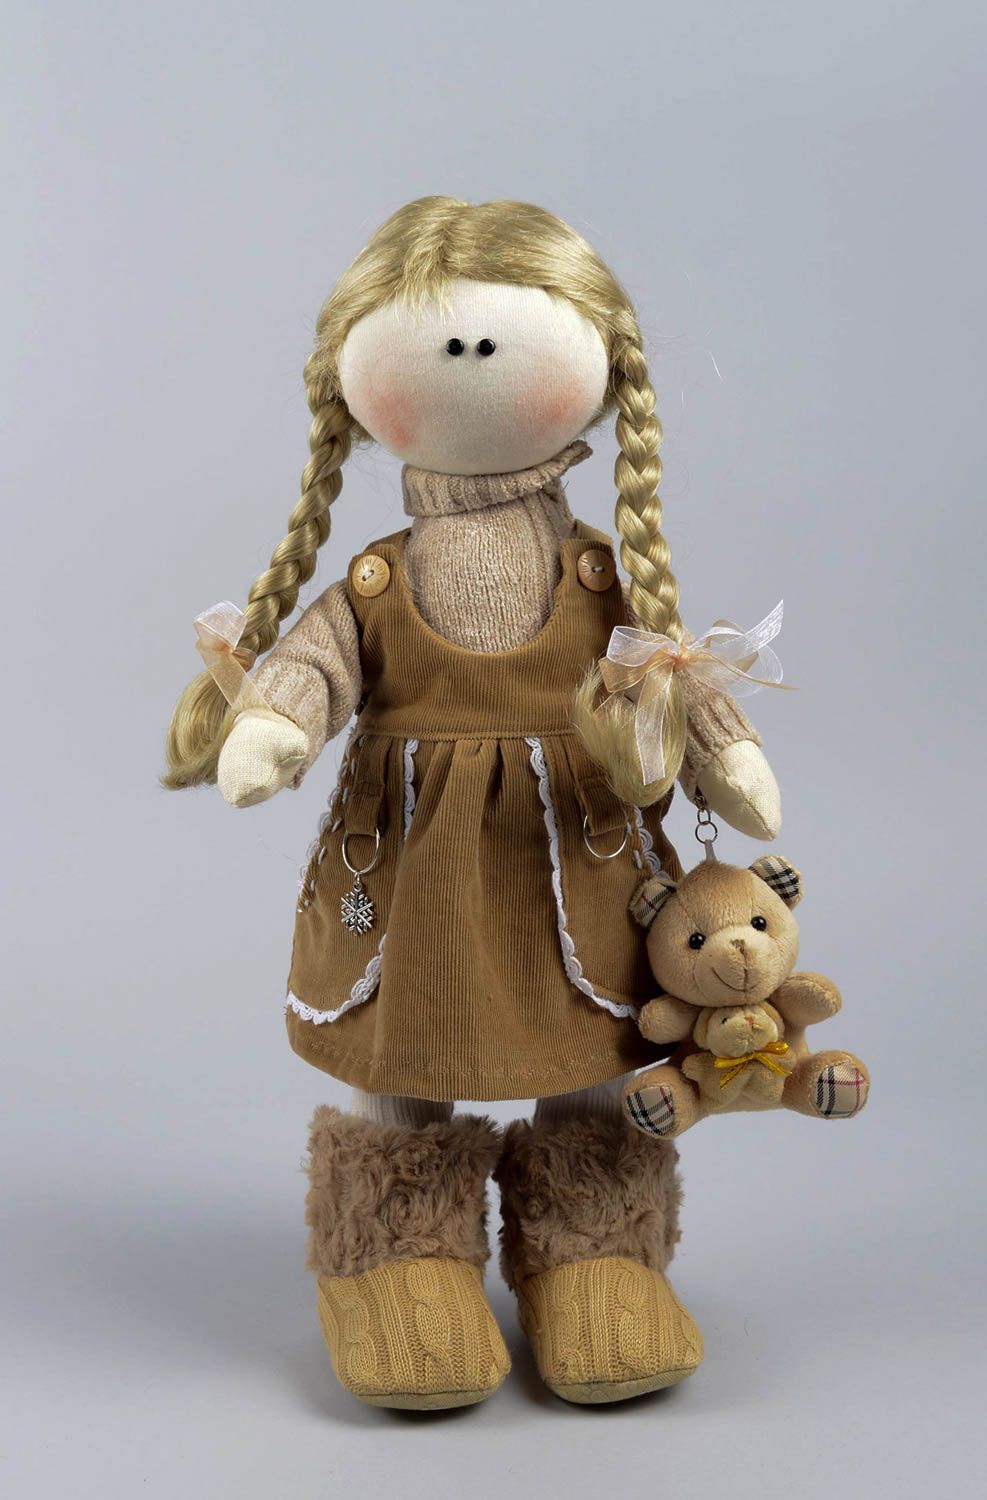 Stylish handmade rag doll unusual soft toy beautiful childrens toys gift ideas photo 1